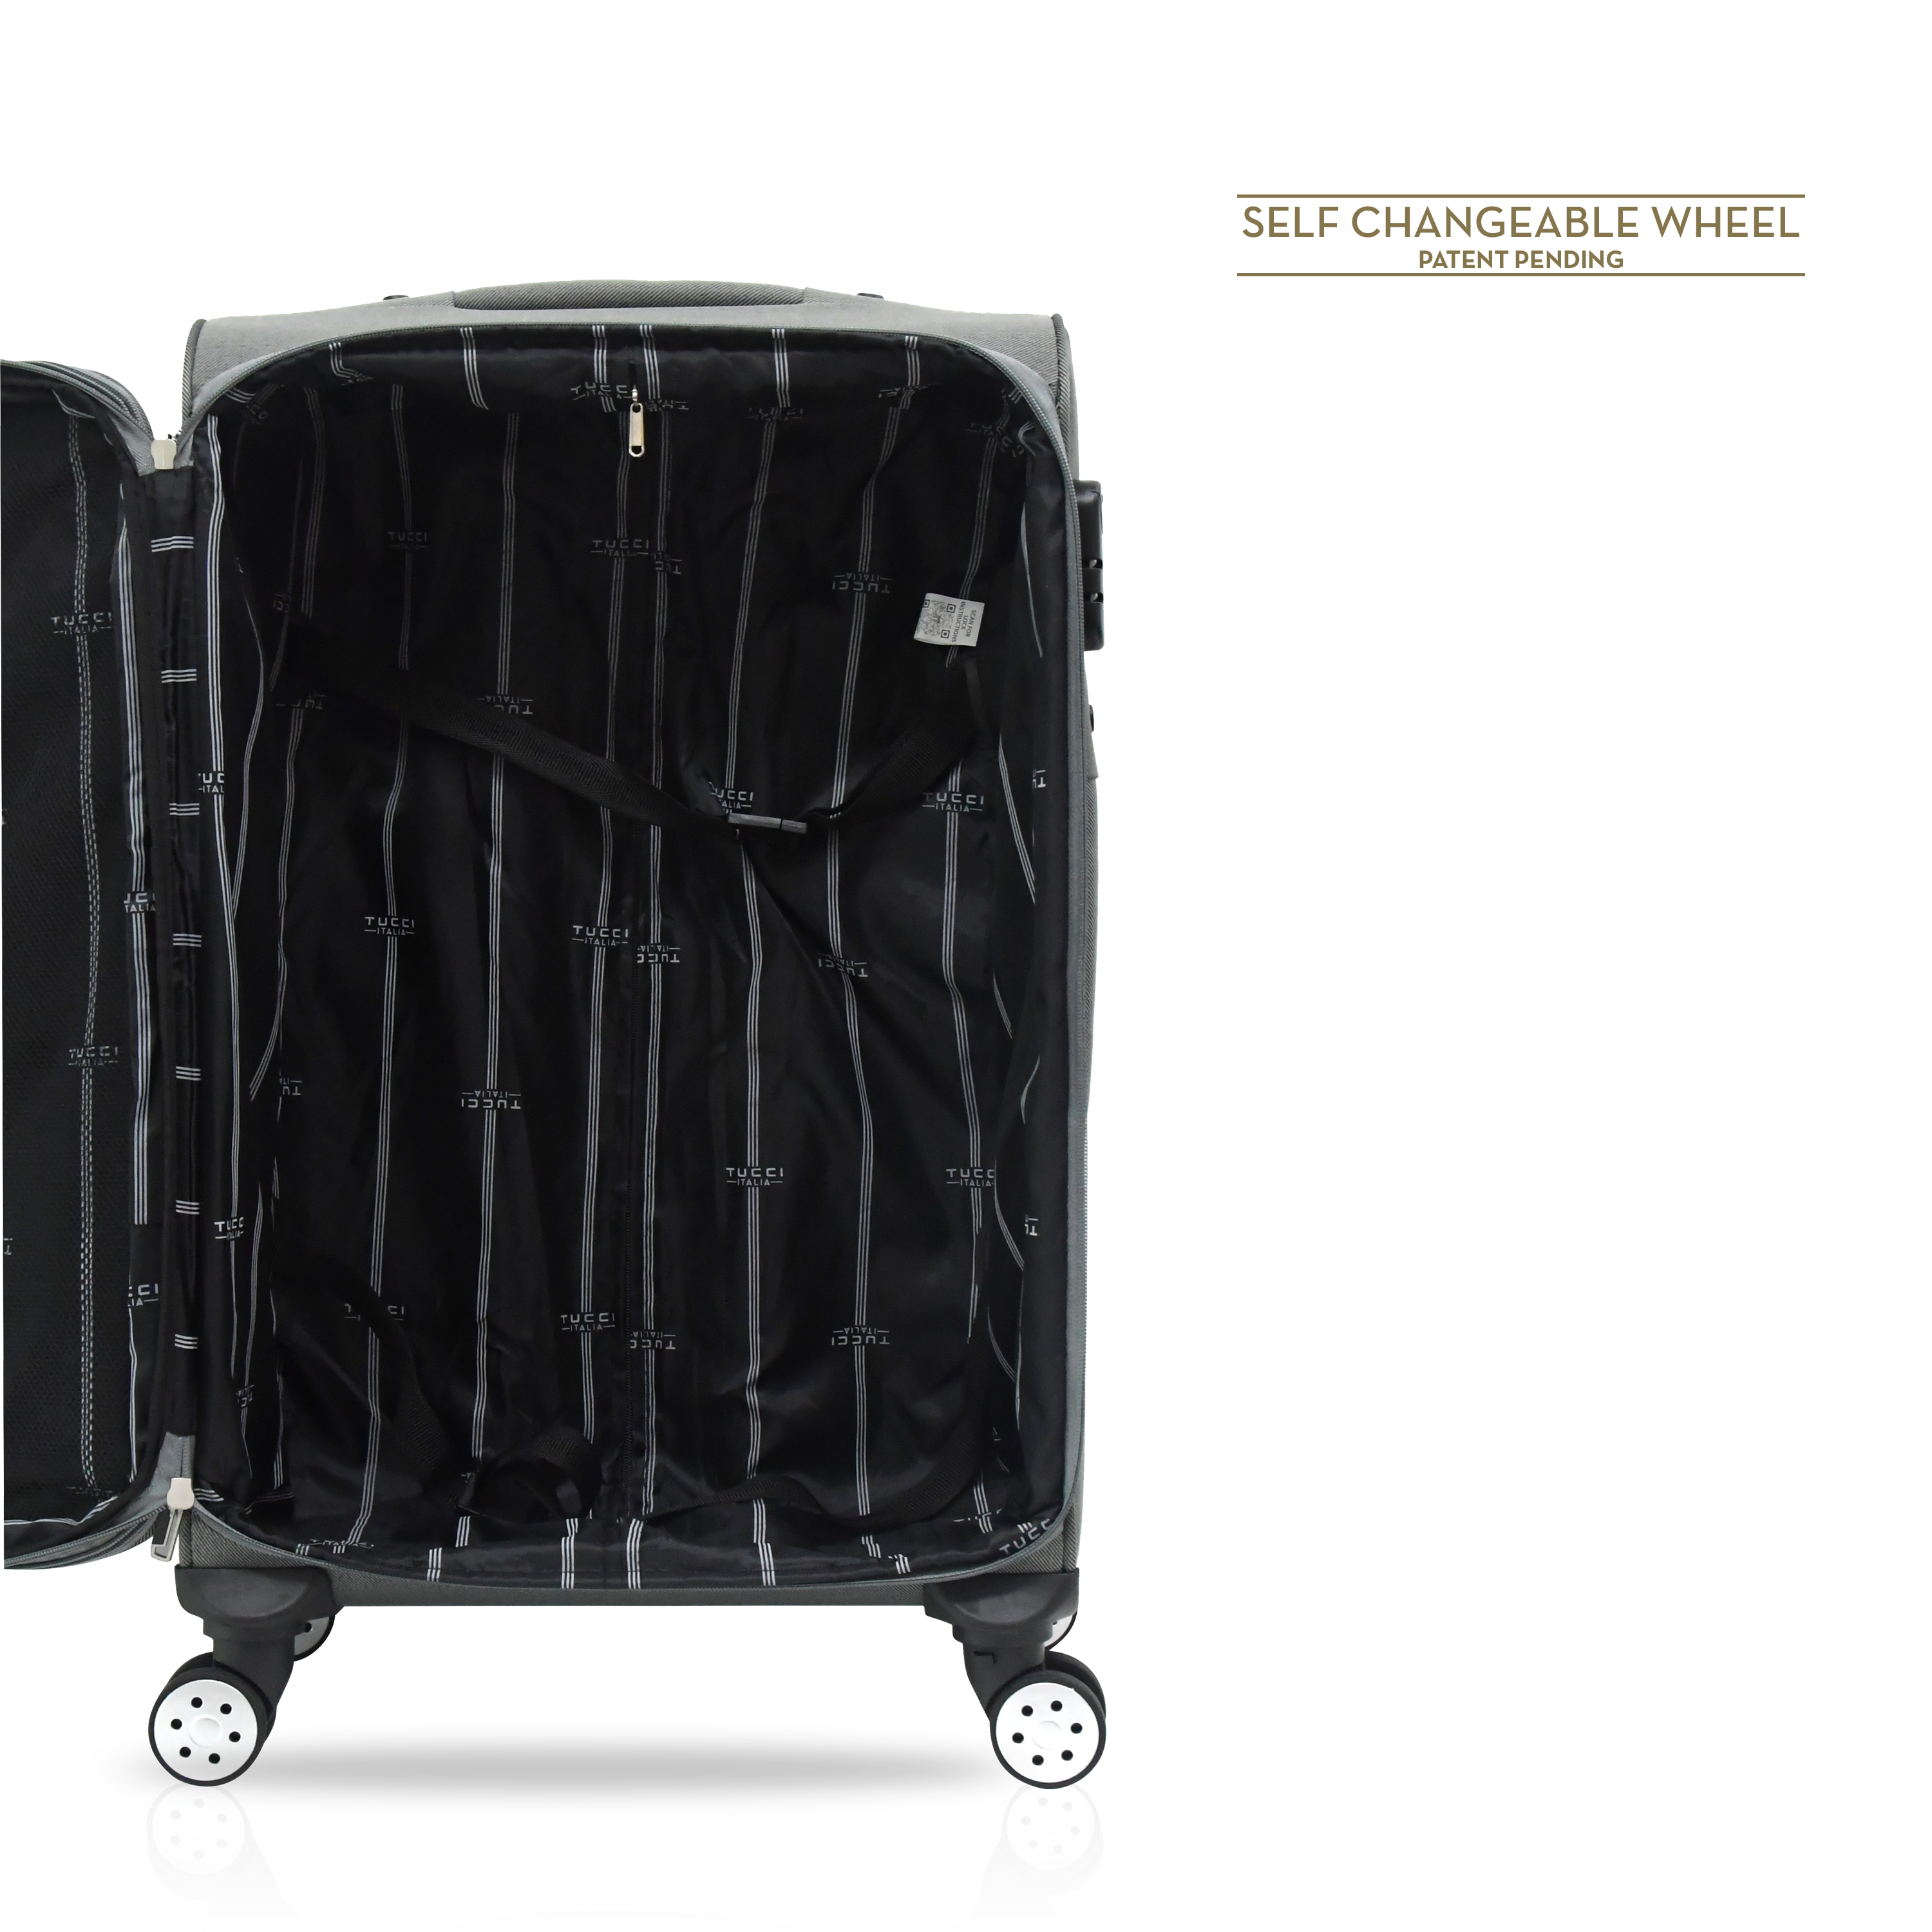 TUCCI Italy TURISTA 24-inch Medium Spinner Luggage Suitcase